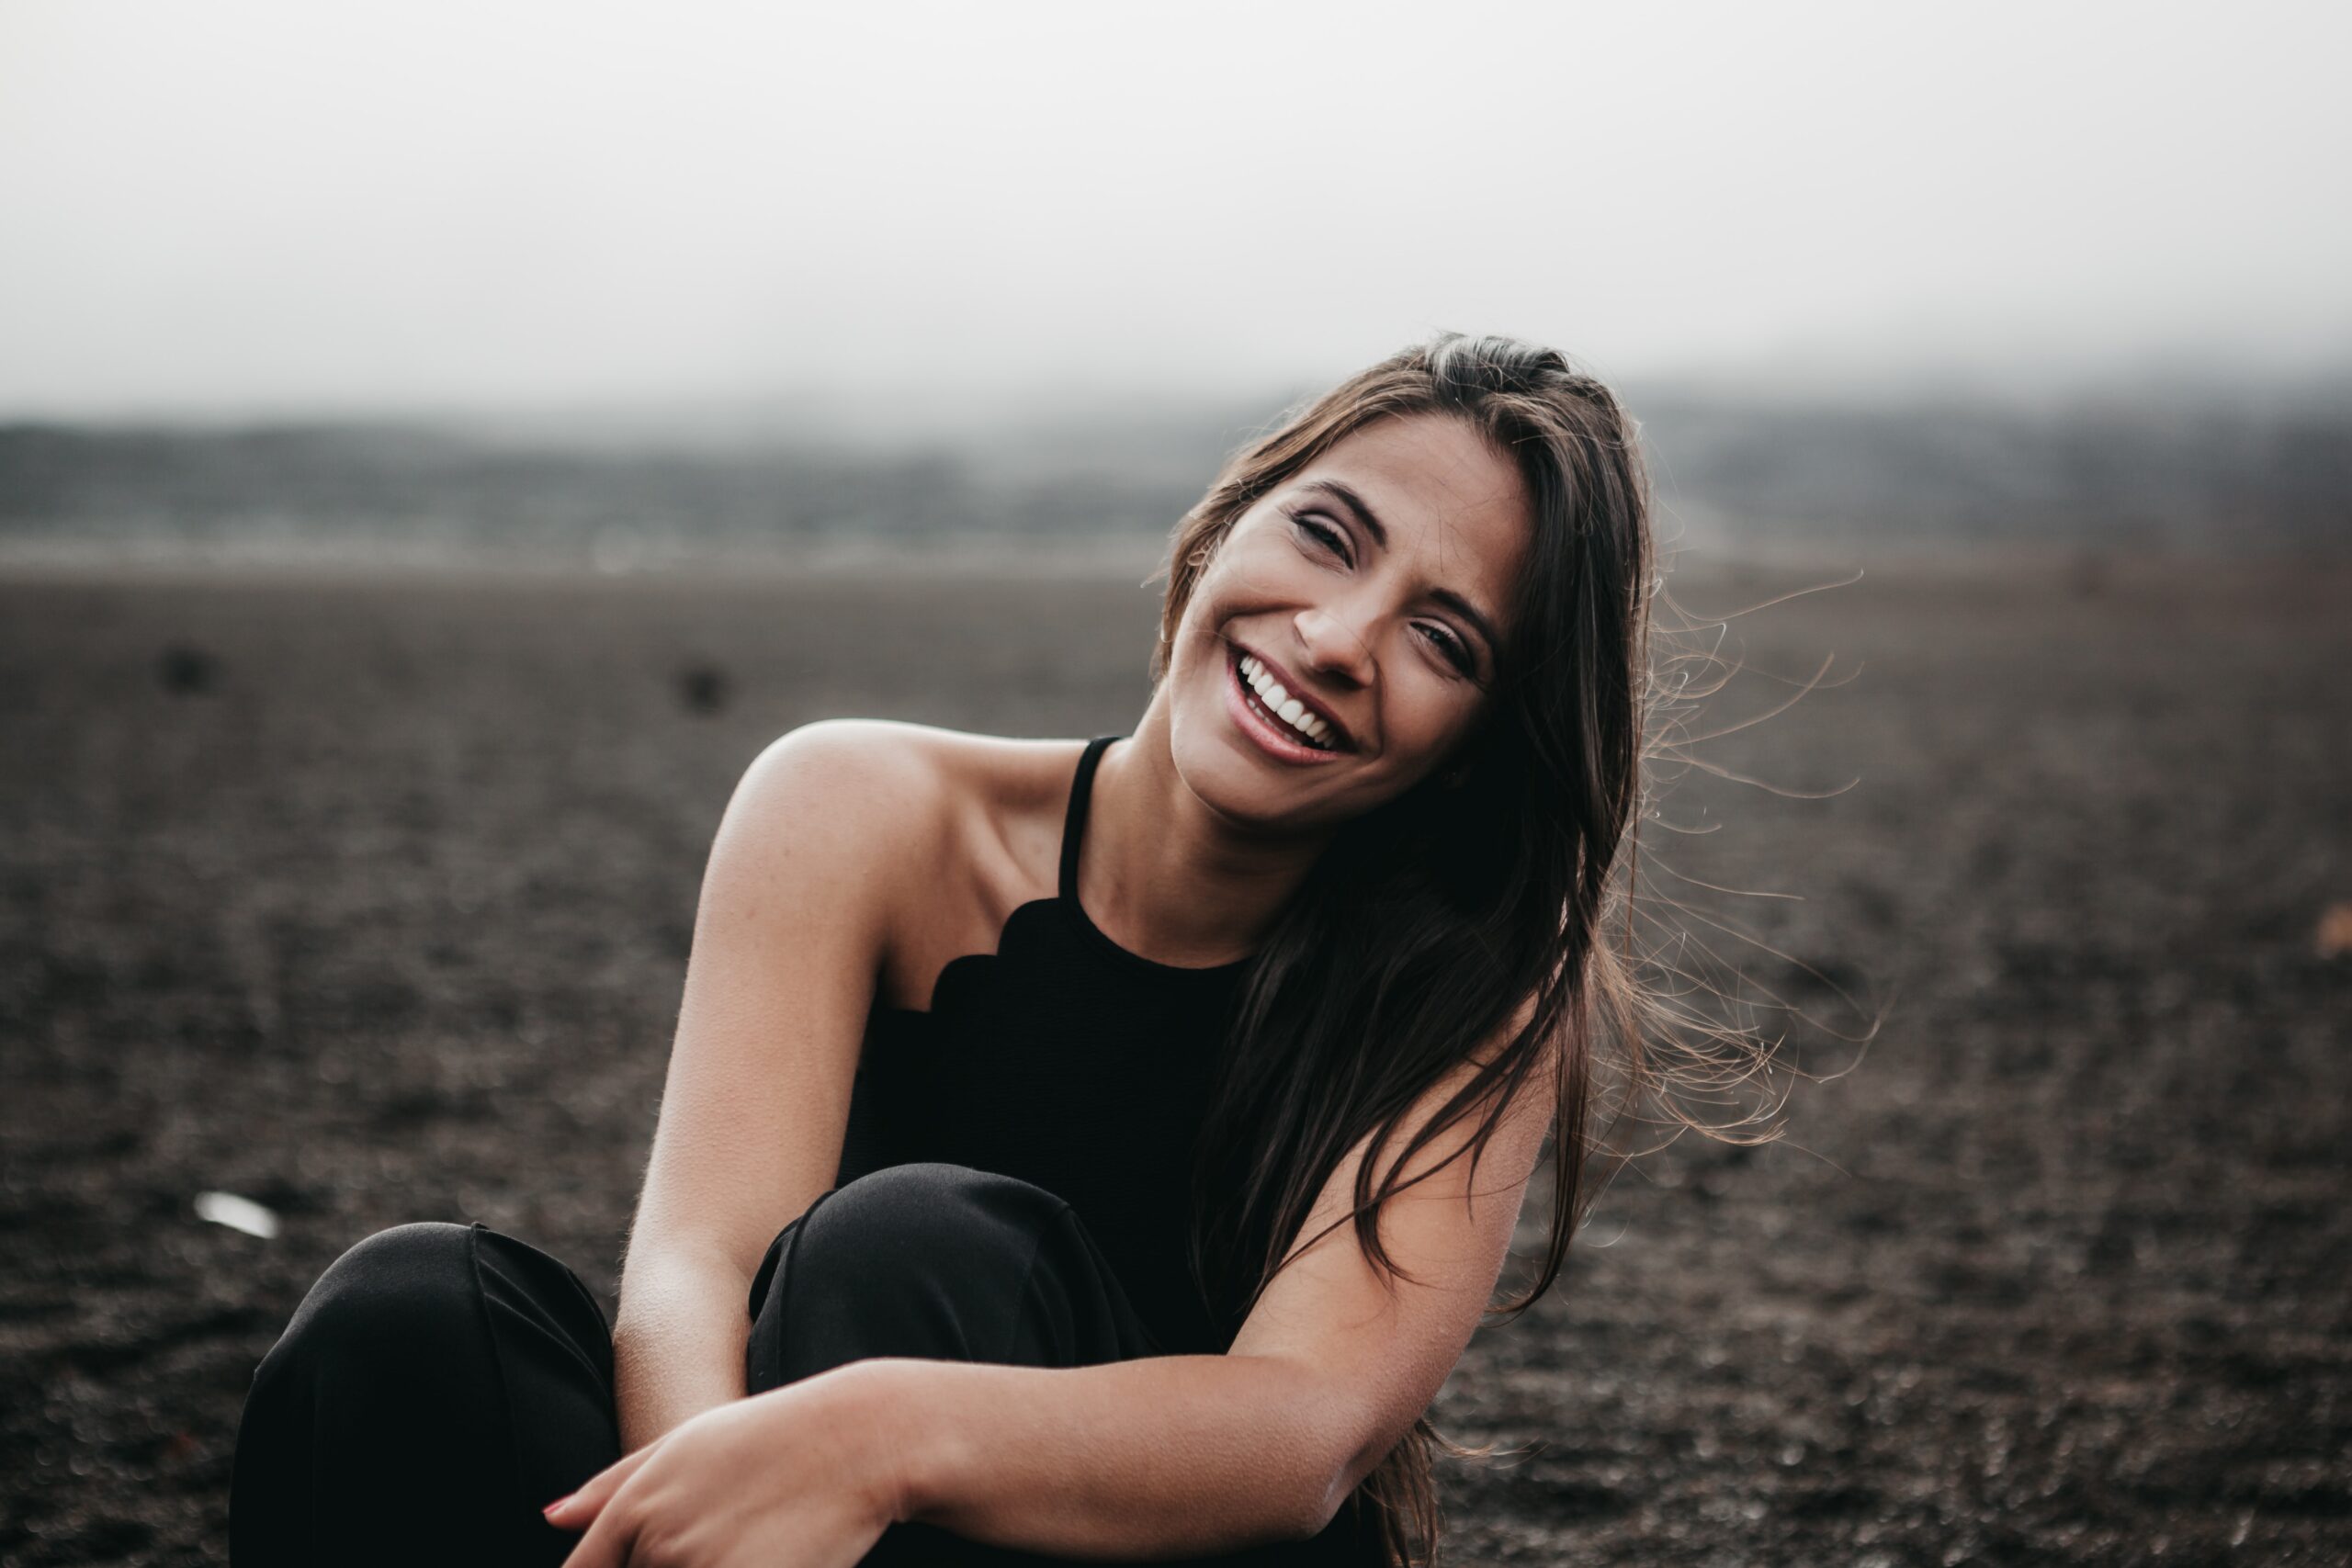 woman smiling